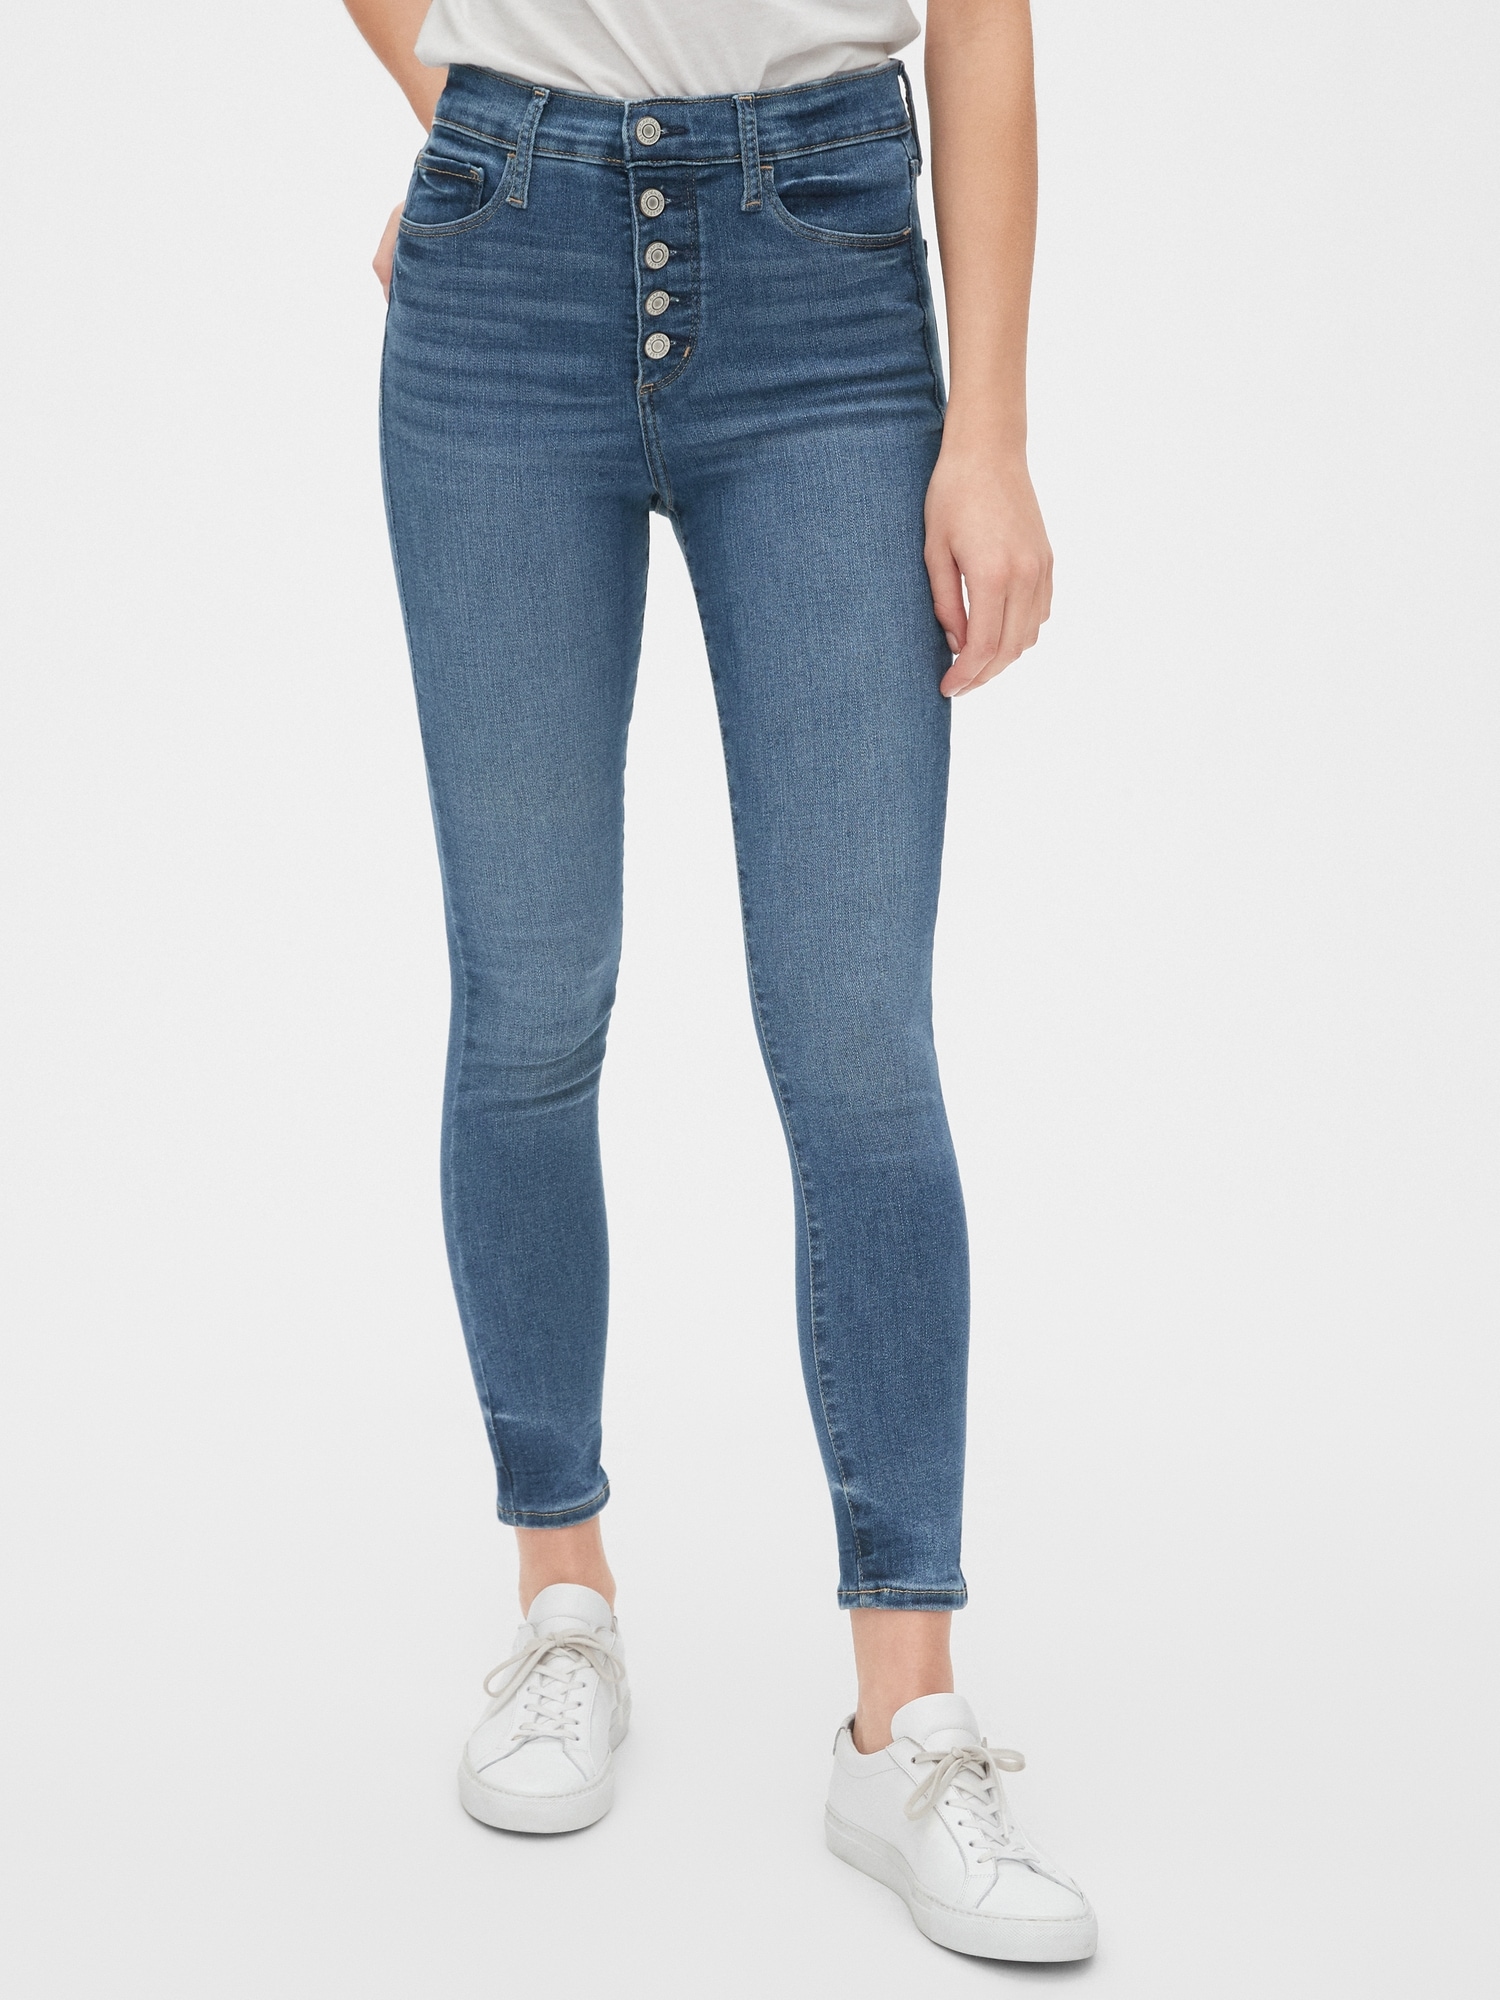 gap high rise jeans